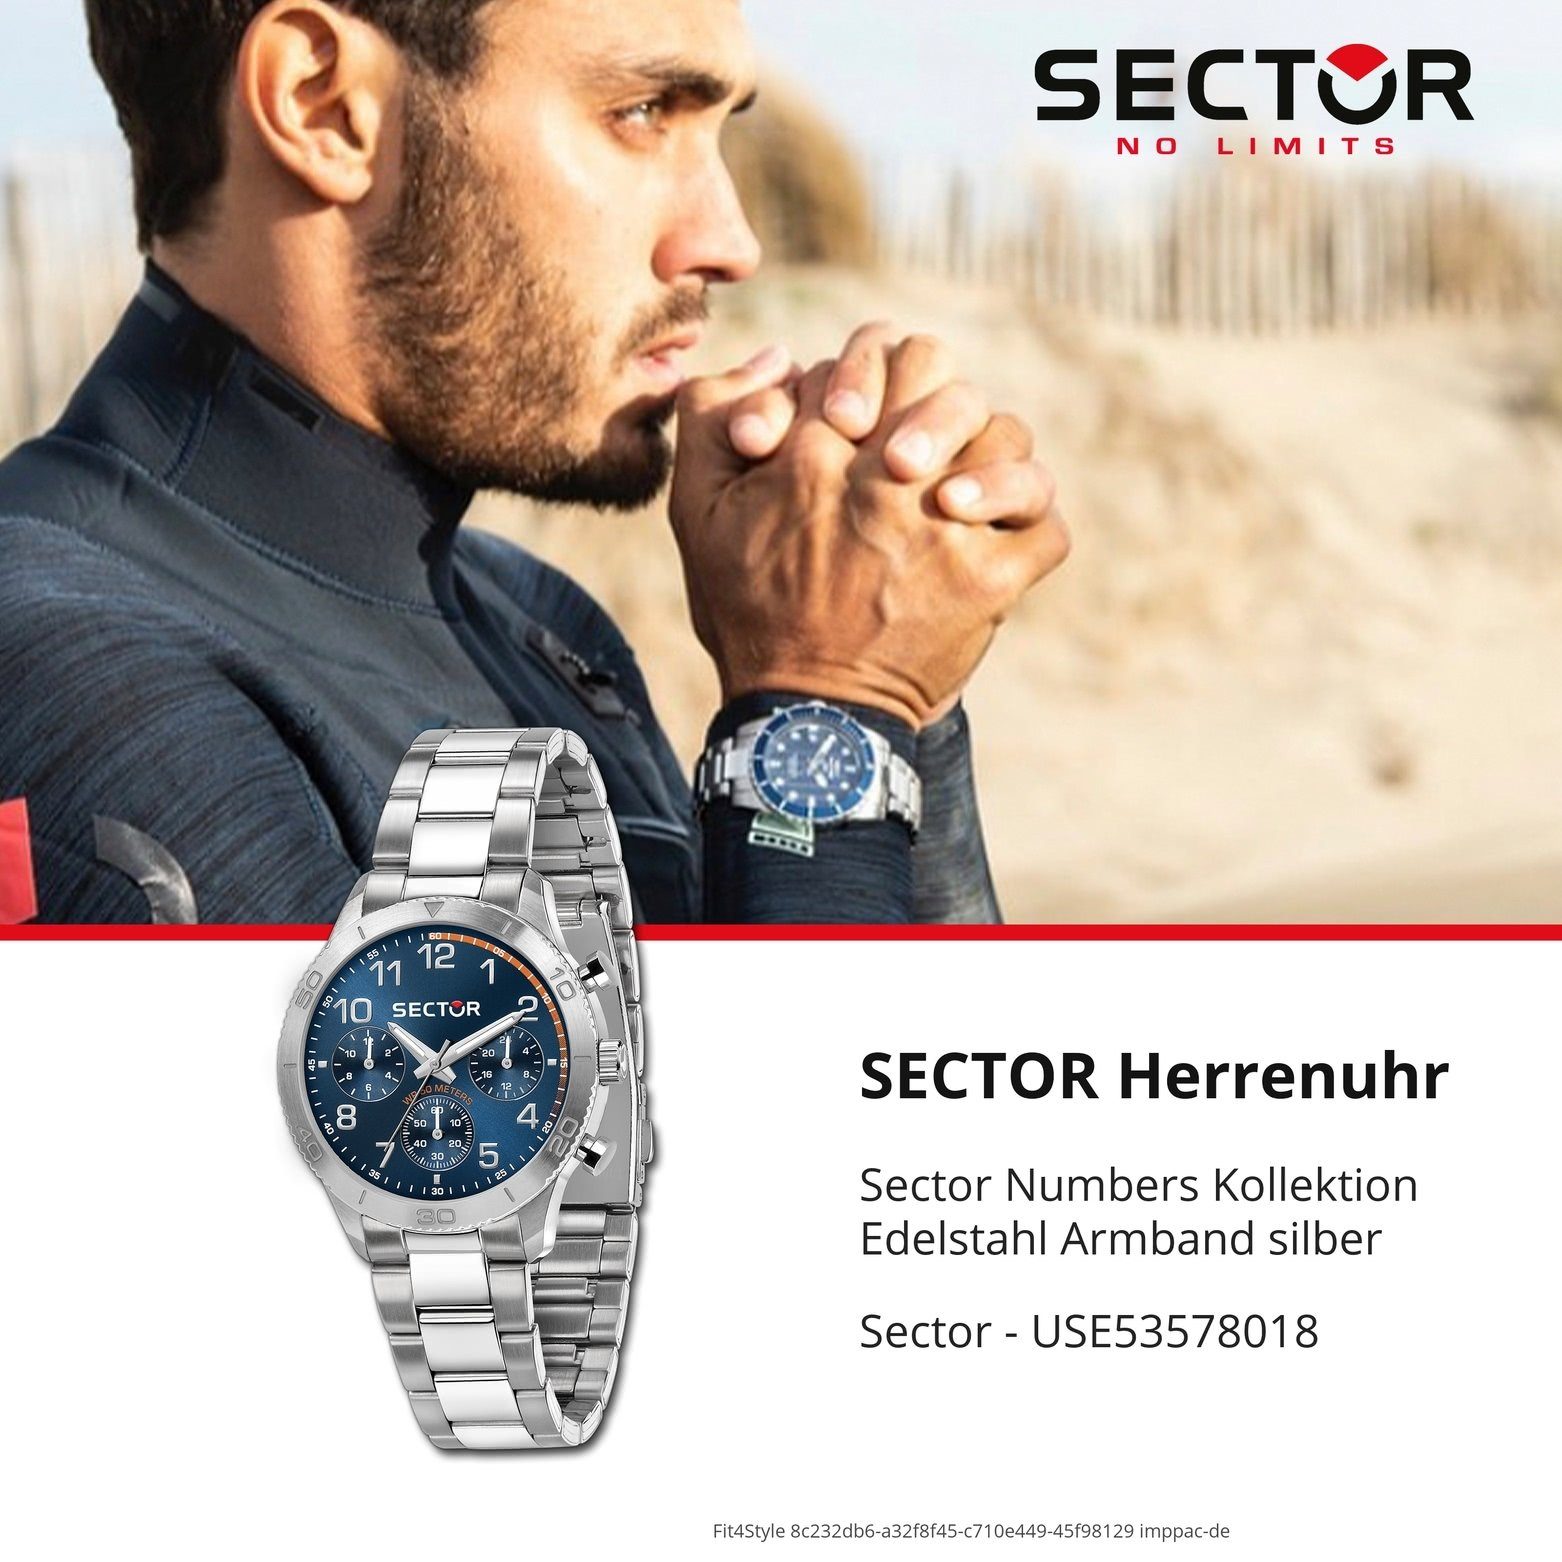 Sector Multifunktionsuhr Sector Herren Fashion-Style Herrenuhr (ca. Edelstahlarmband, groß 40mm), rund, Multifunkt, Armbanduhr